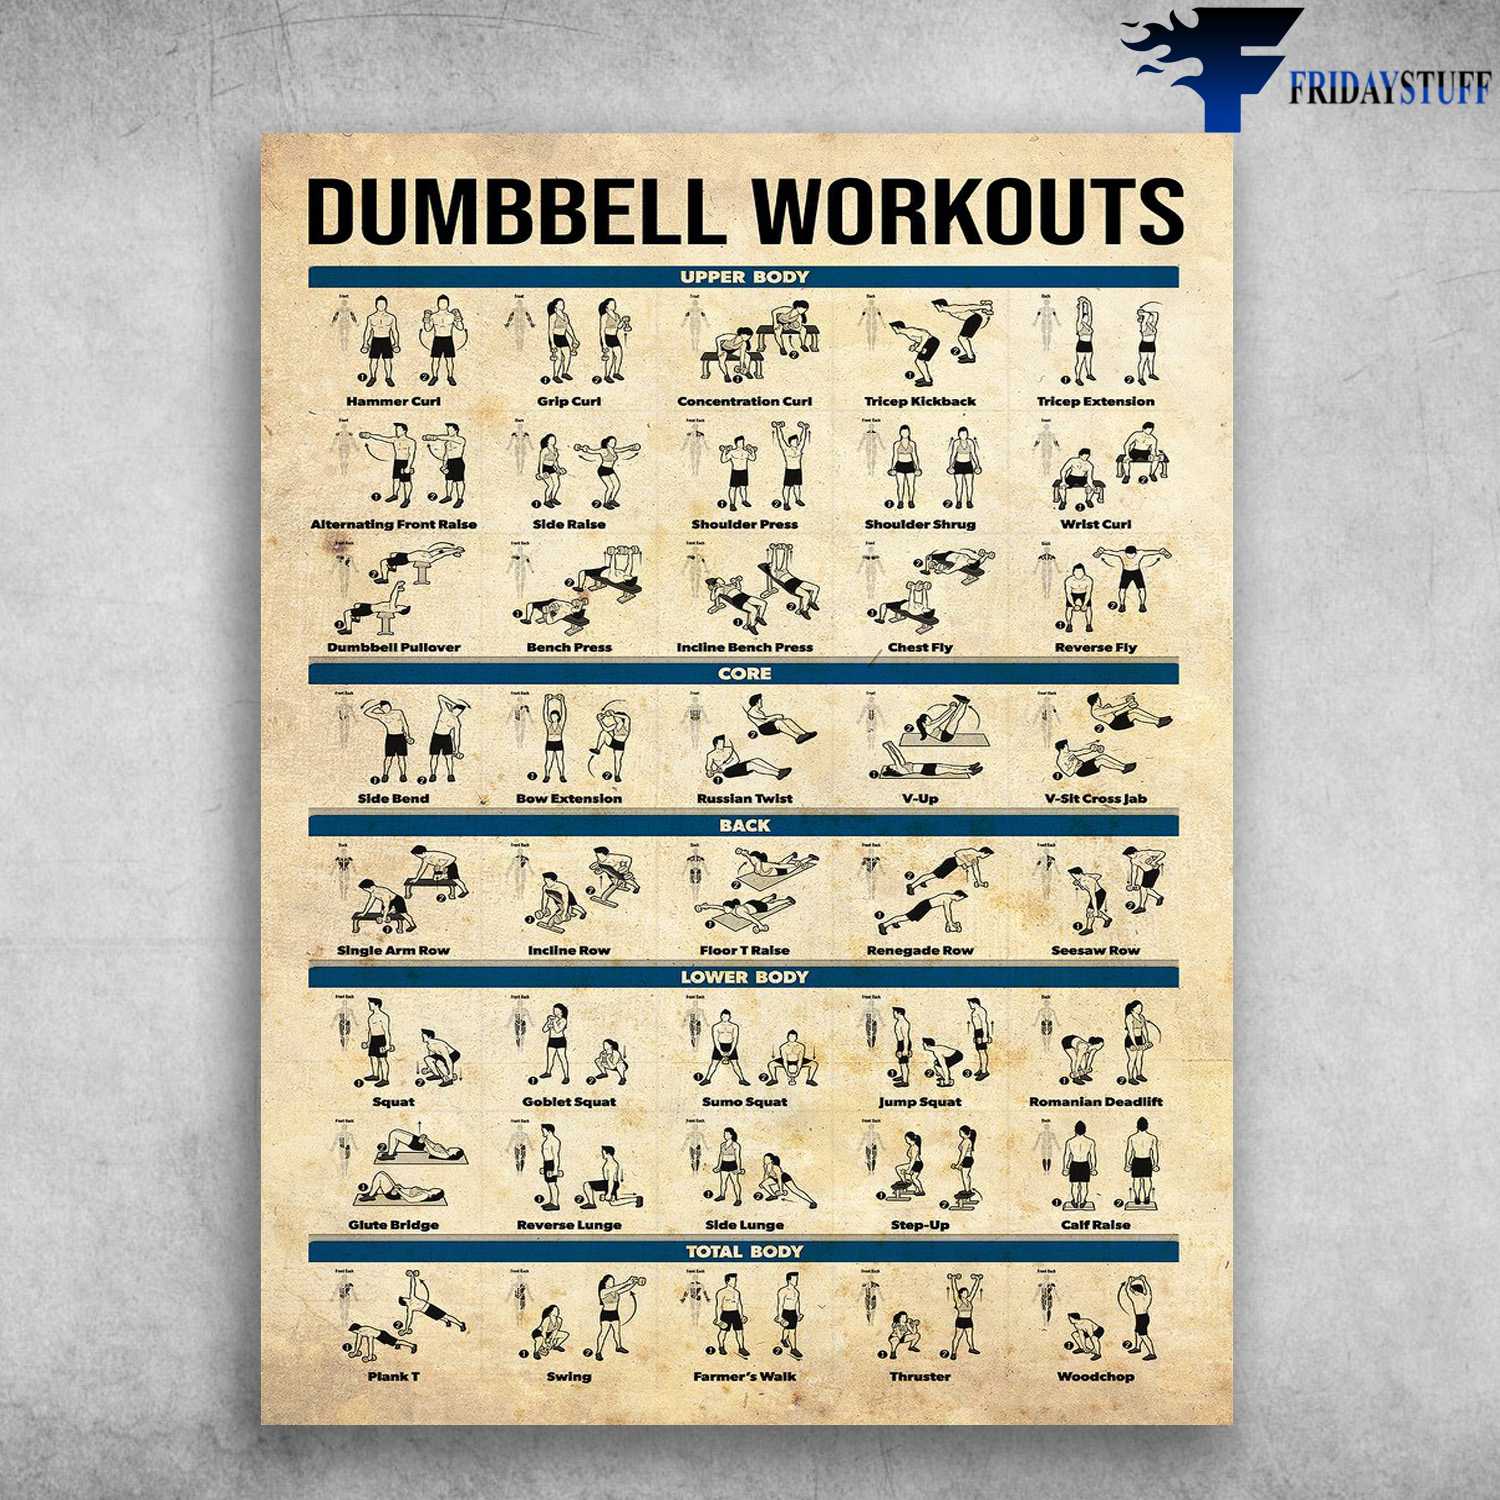 Dumbbell Workouts - Upper Body, Core, Back, Lower Body, Total Body